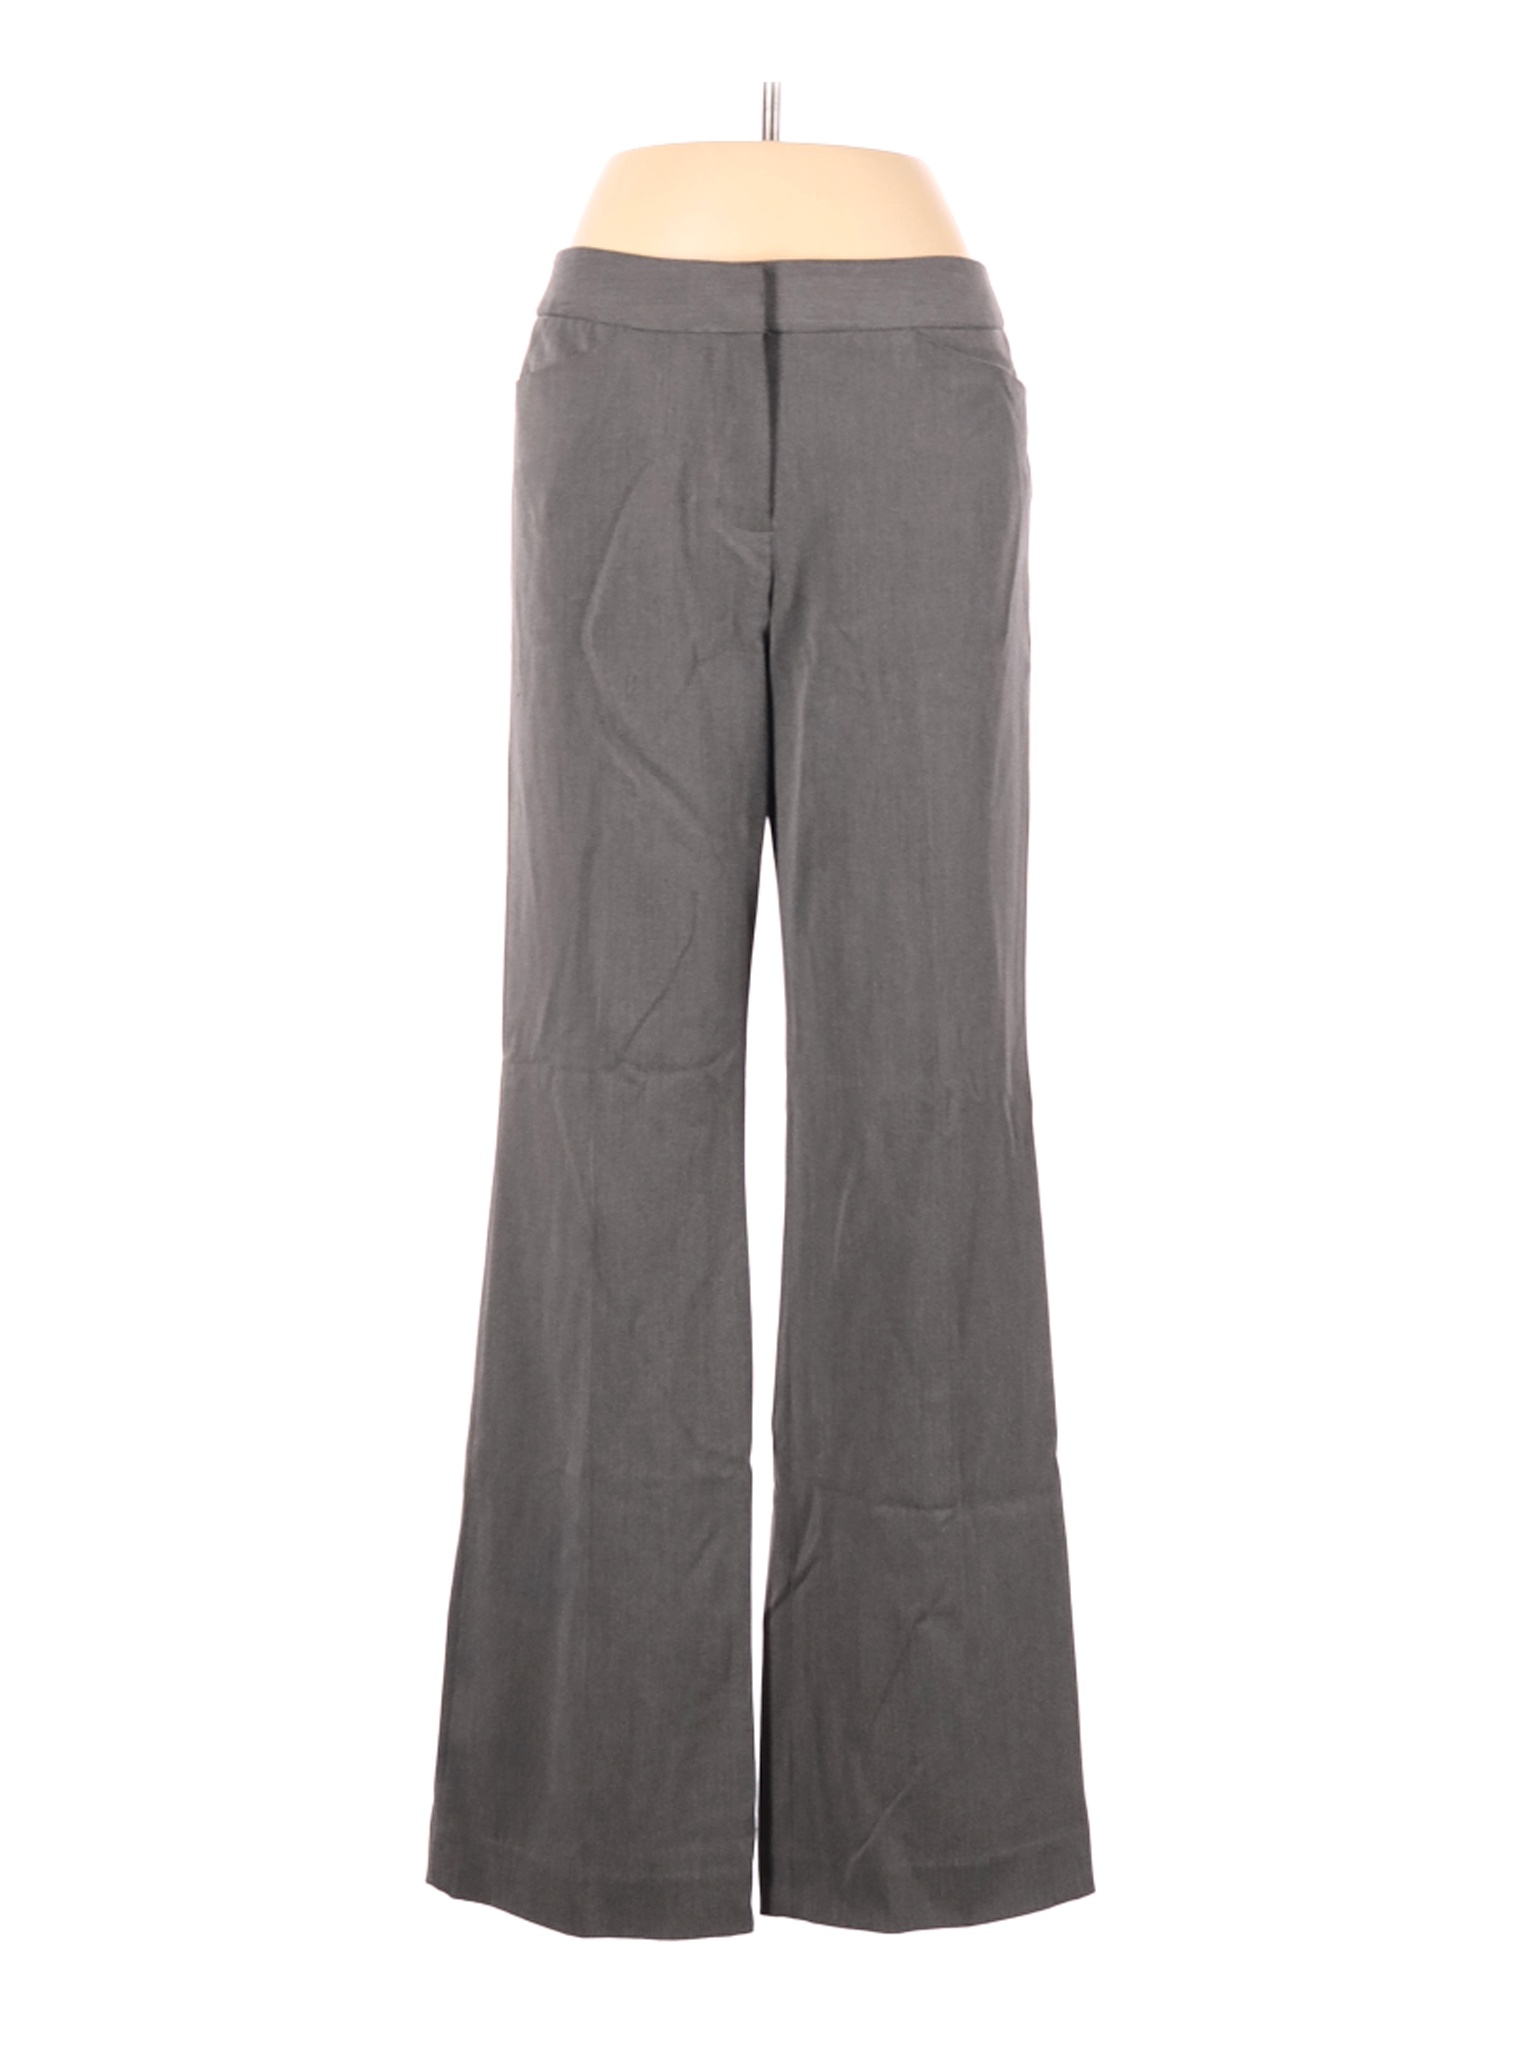 Liz Claiborne Women Gray Dress Pants 6 | eBay